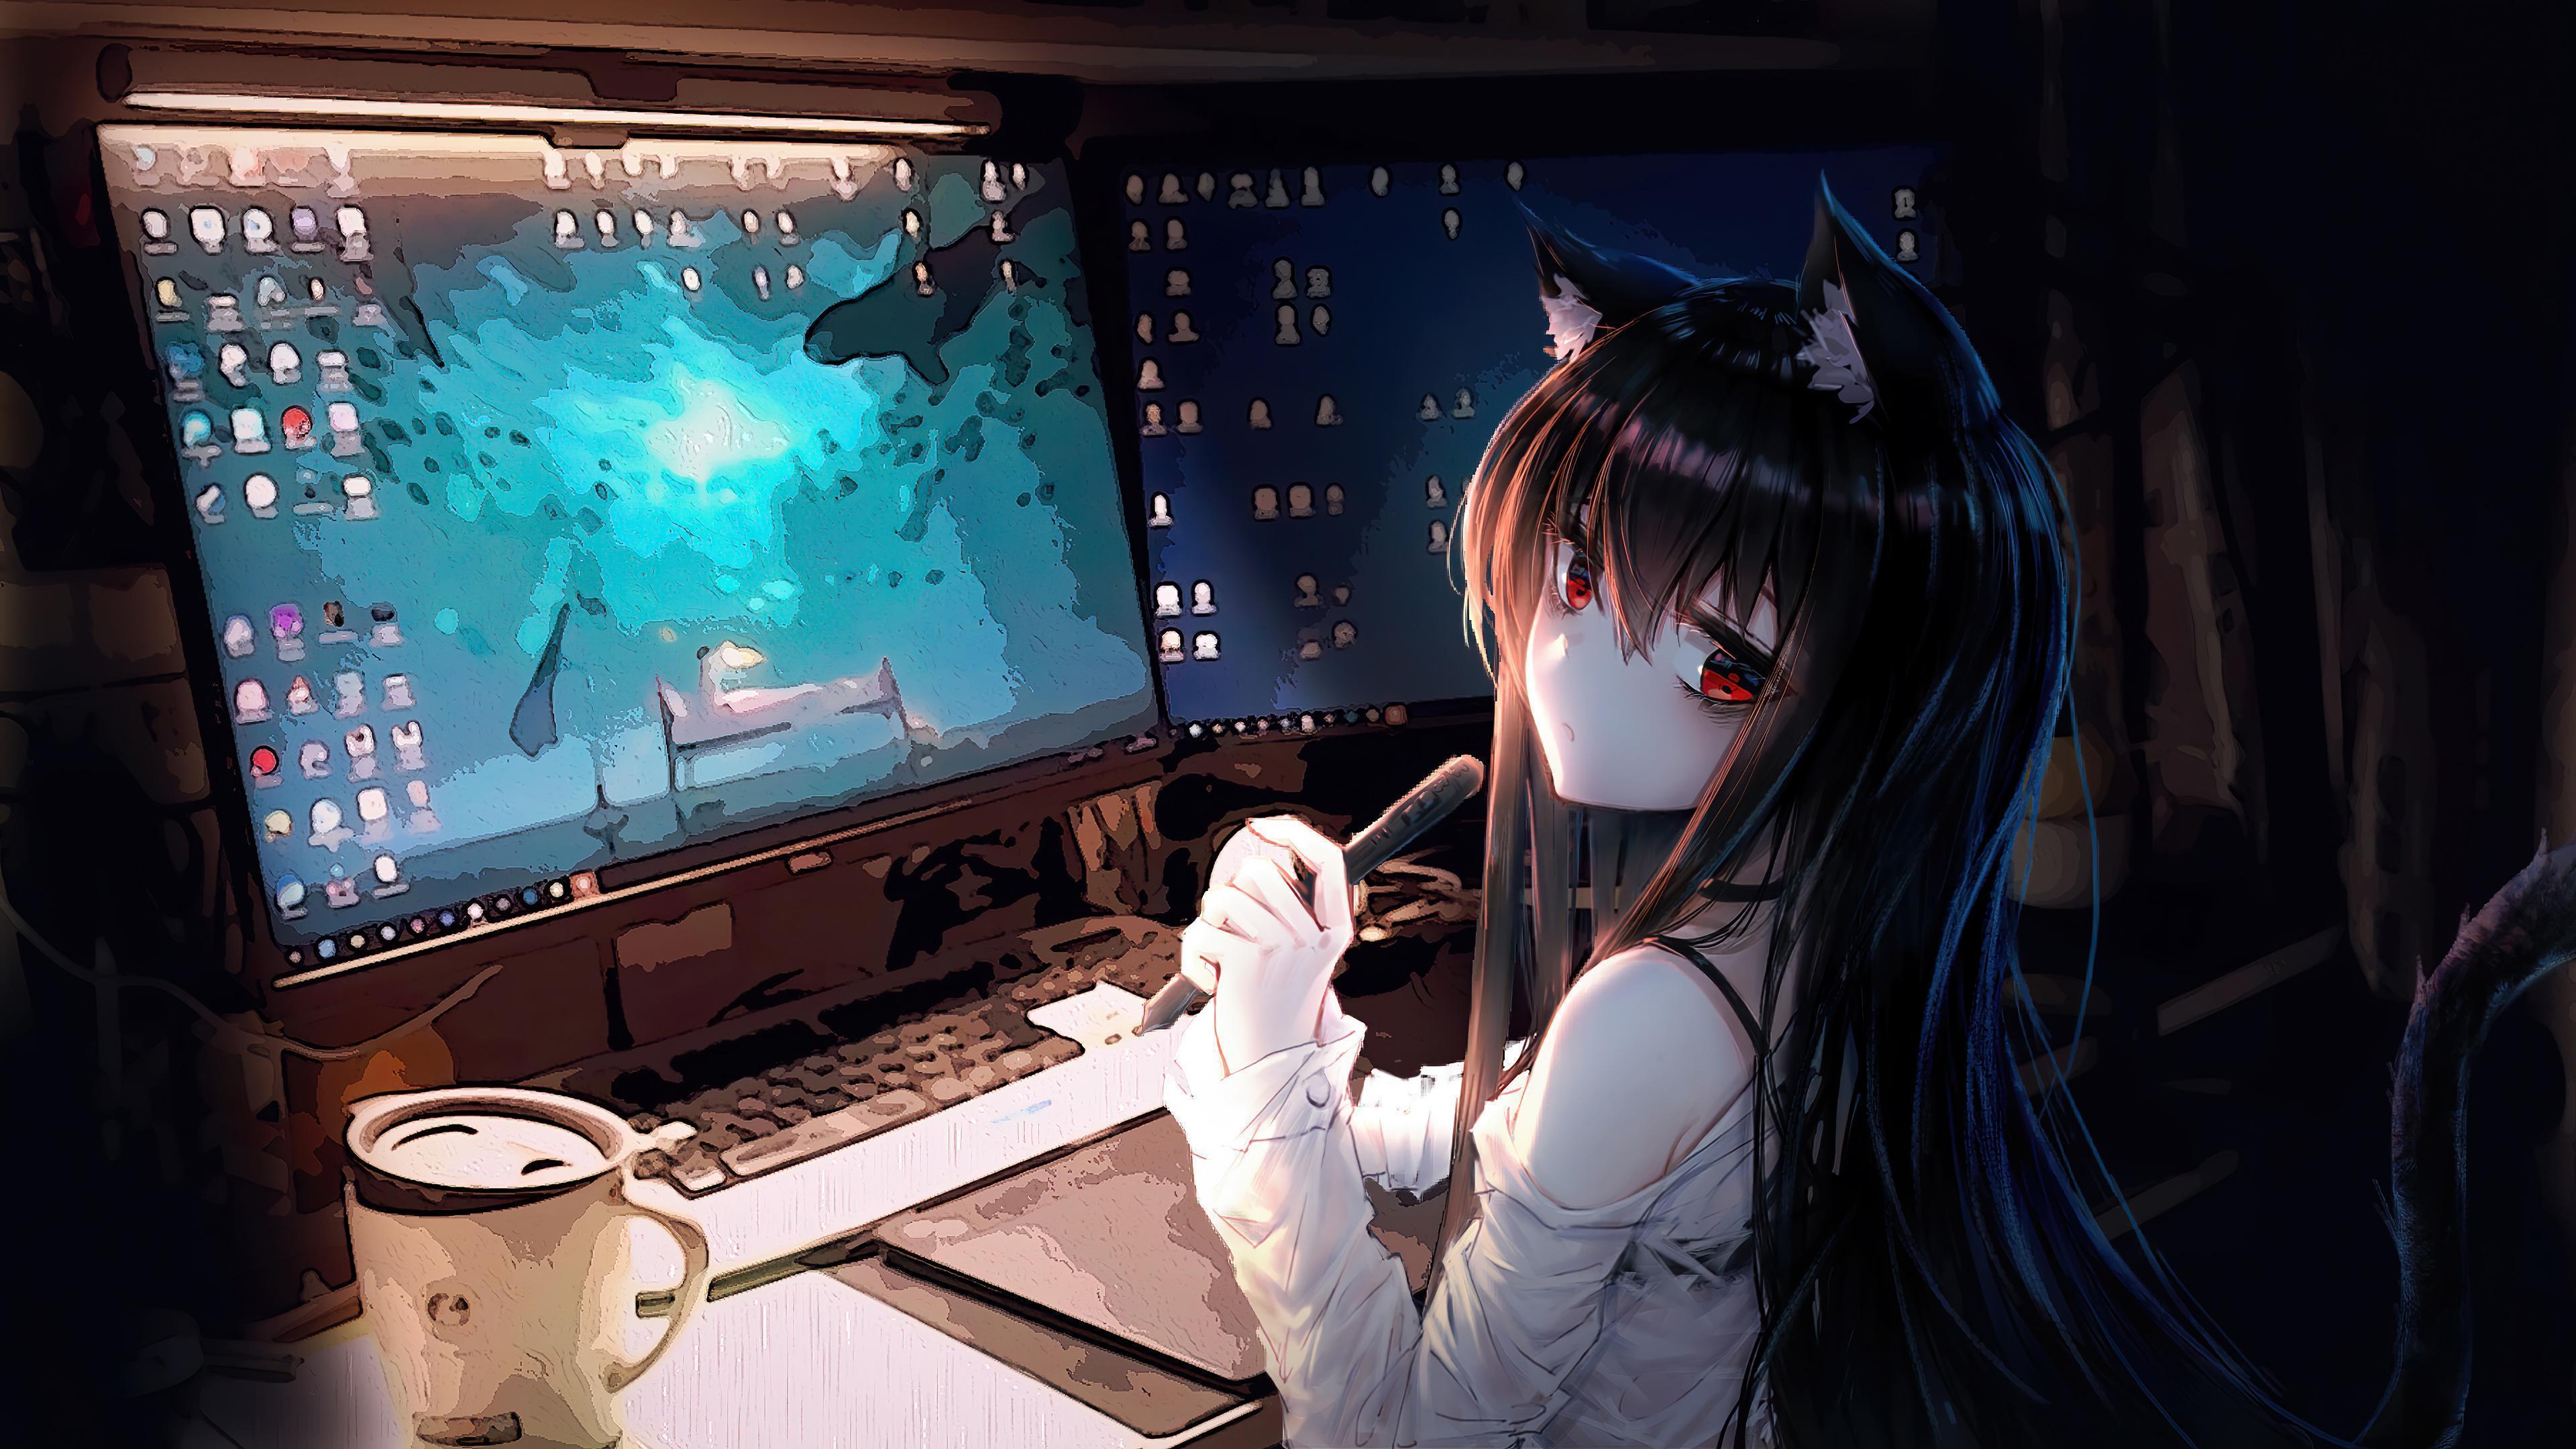 HD wallpaper, Girl, 4K, Anime, Desktop, Computer